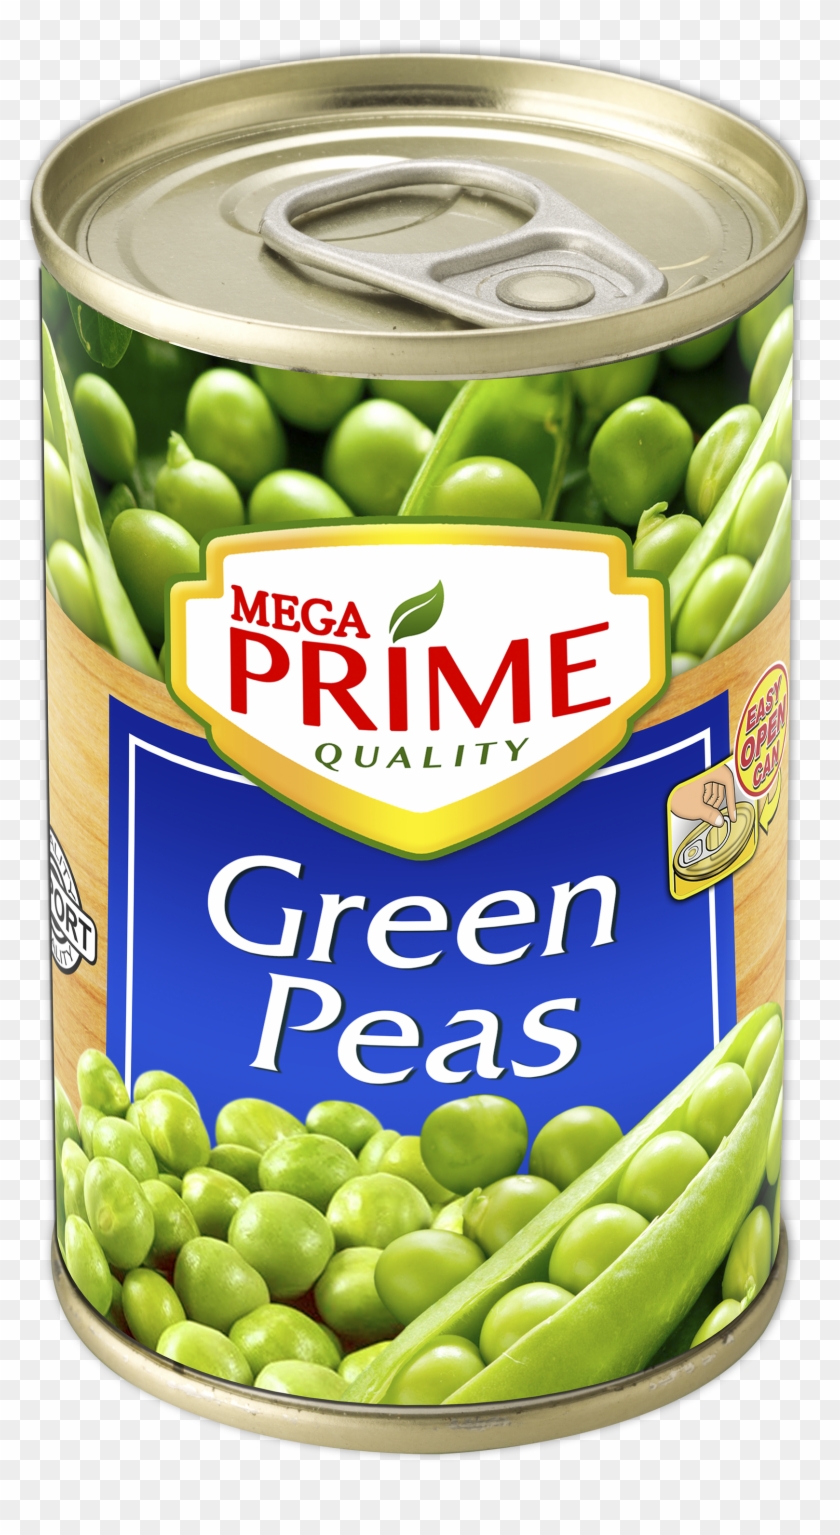 Prime - Green Peas - Mega Prime Fruit Cocktail Clipart #1901916